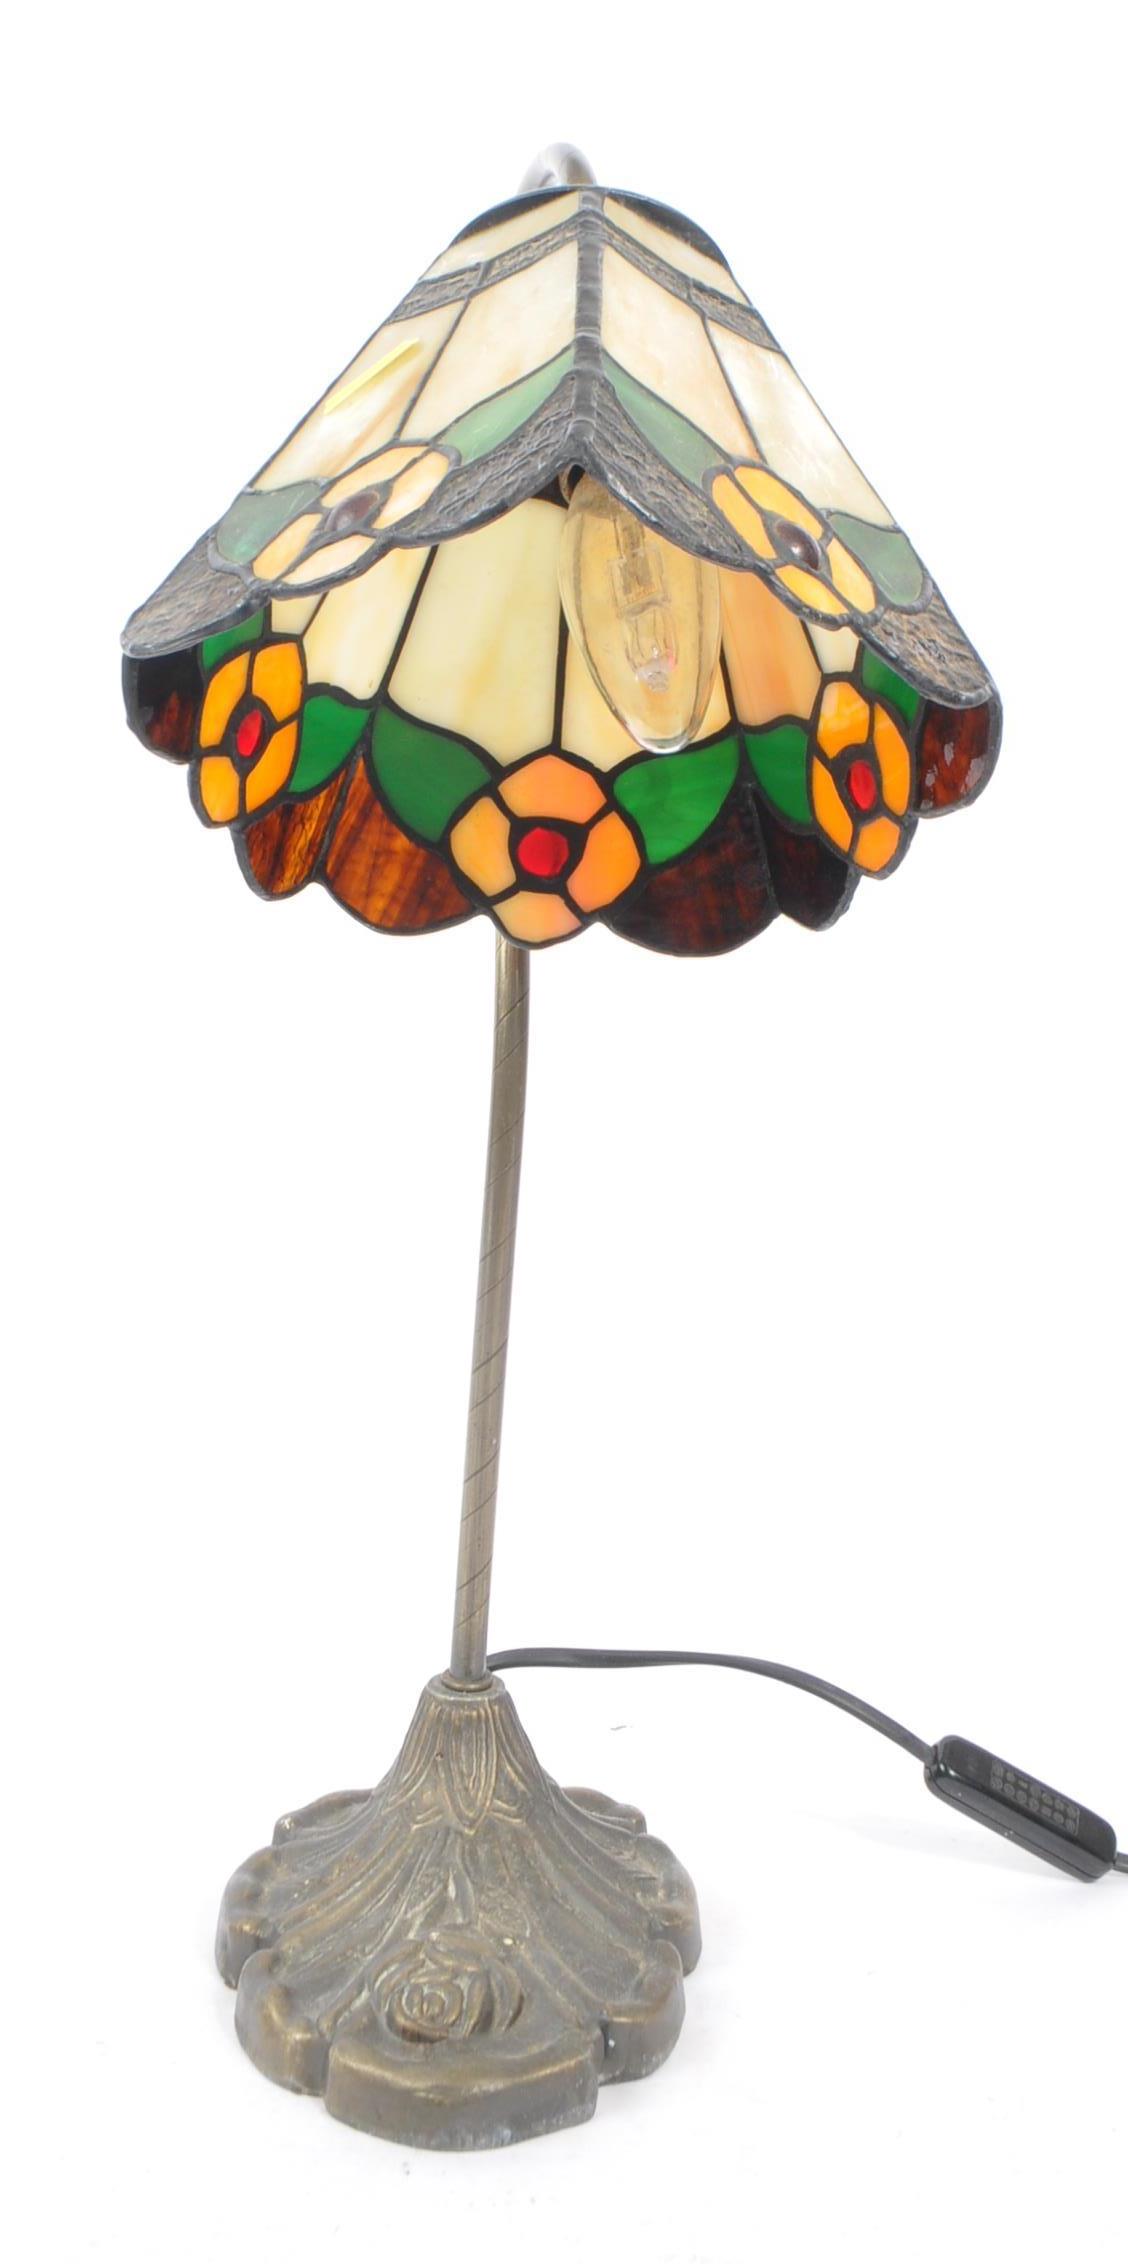 VINTAGE 20TH CENTURY ART NOUVEAU STYLE TIFFANY DESK LAMP - Image 2 of 5